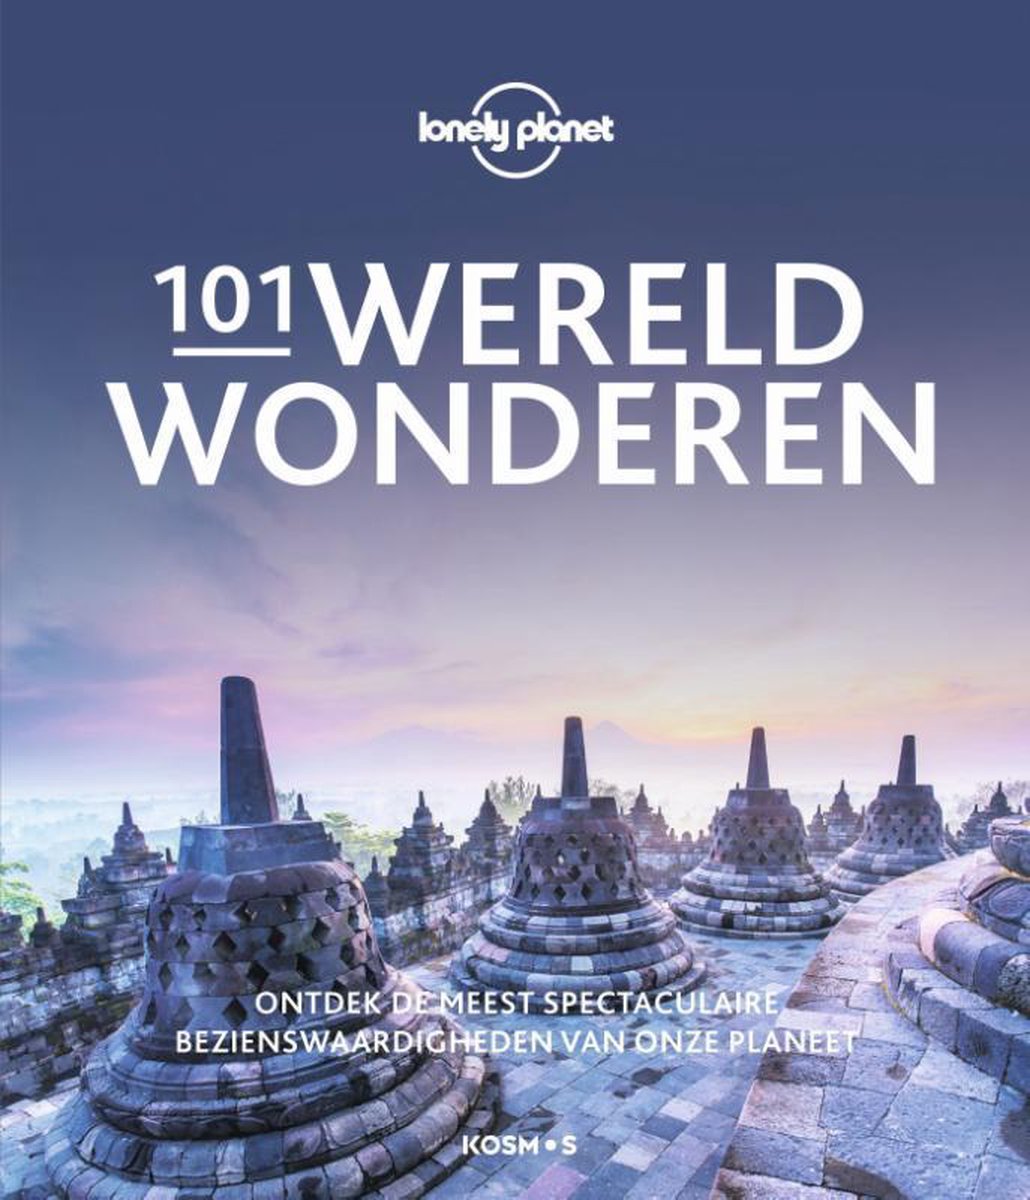 Lonely planet - 101 Wereldwonderen - Lonely Planet